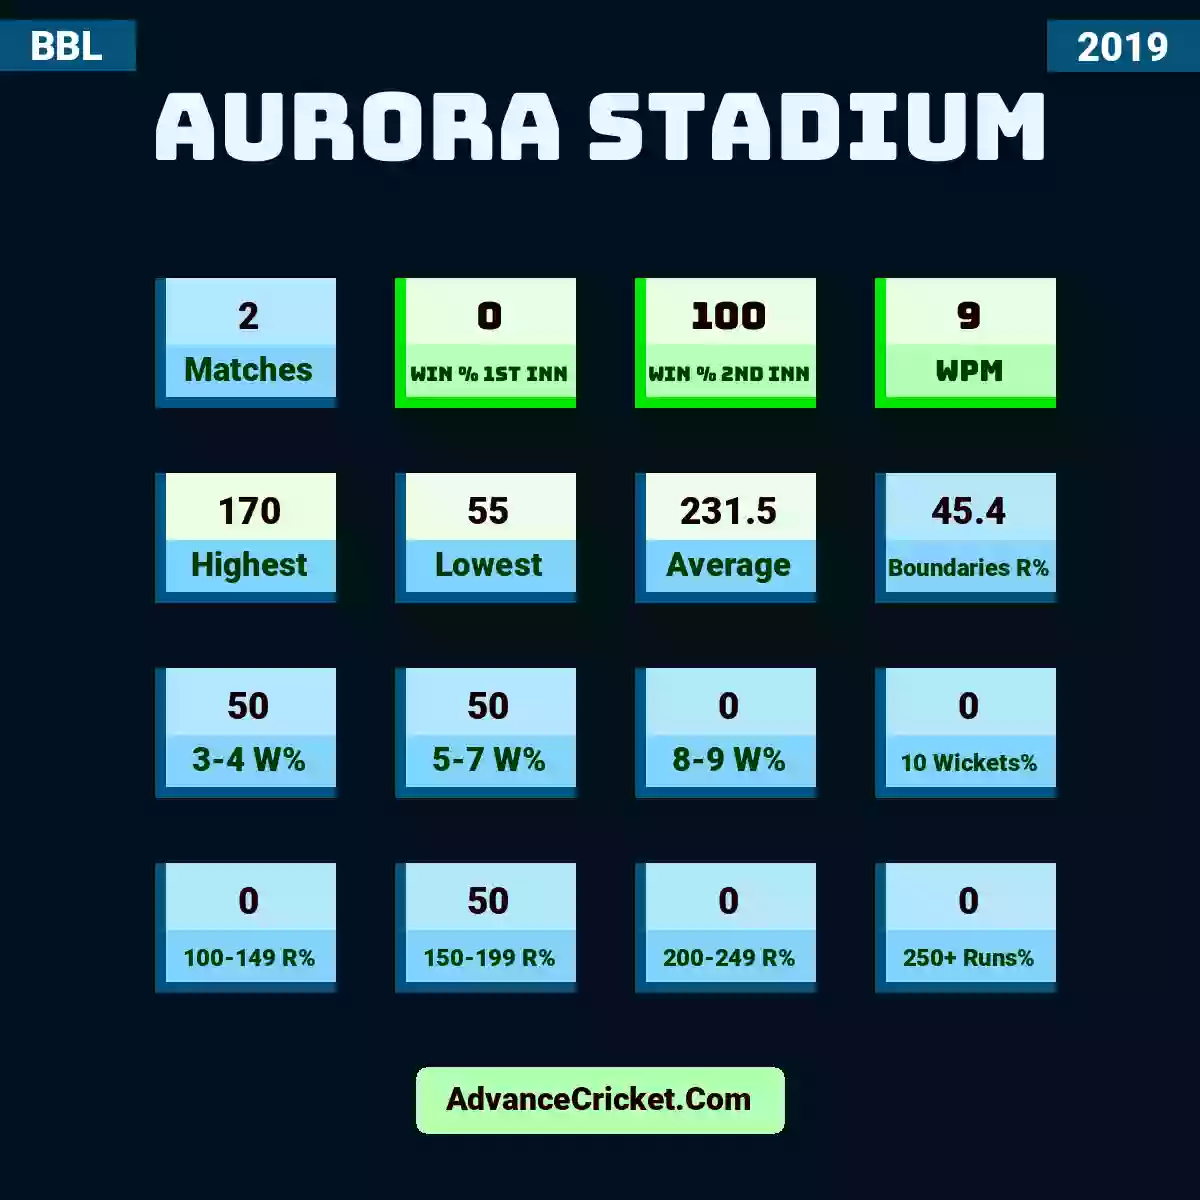 Image showing Aurora Stadium with Matches: 2, Win % 1st Inn: 0, Win % 2nd Inn: 100, WPM: 9, Highest: 170, Lowest: 55, Average: 231.5, Boundaries R%: 45.4, 3-4 W%: 50, 5-7 W%: 50, 8-9 W%: 0, 10 Wickets%: 0, 100-149 R%: 0, 150-199 R%: 50, 200-249 R%: 0, 250+ Runs%: 0.